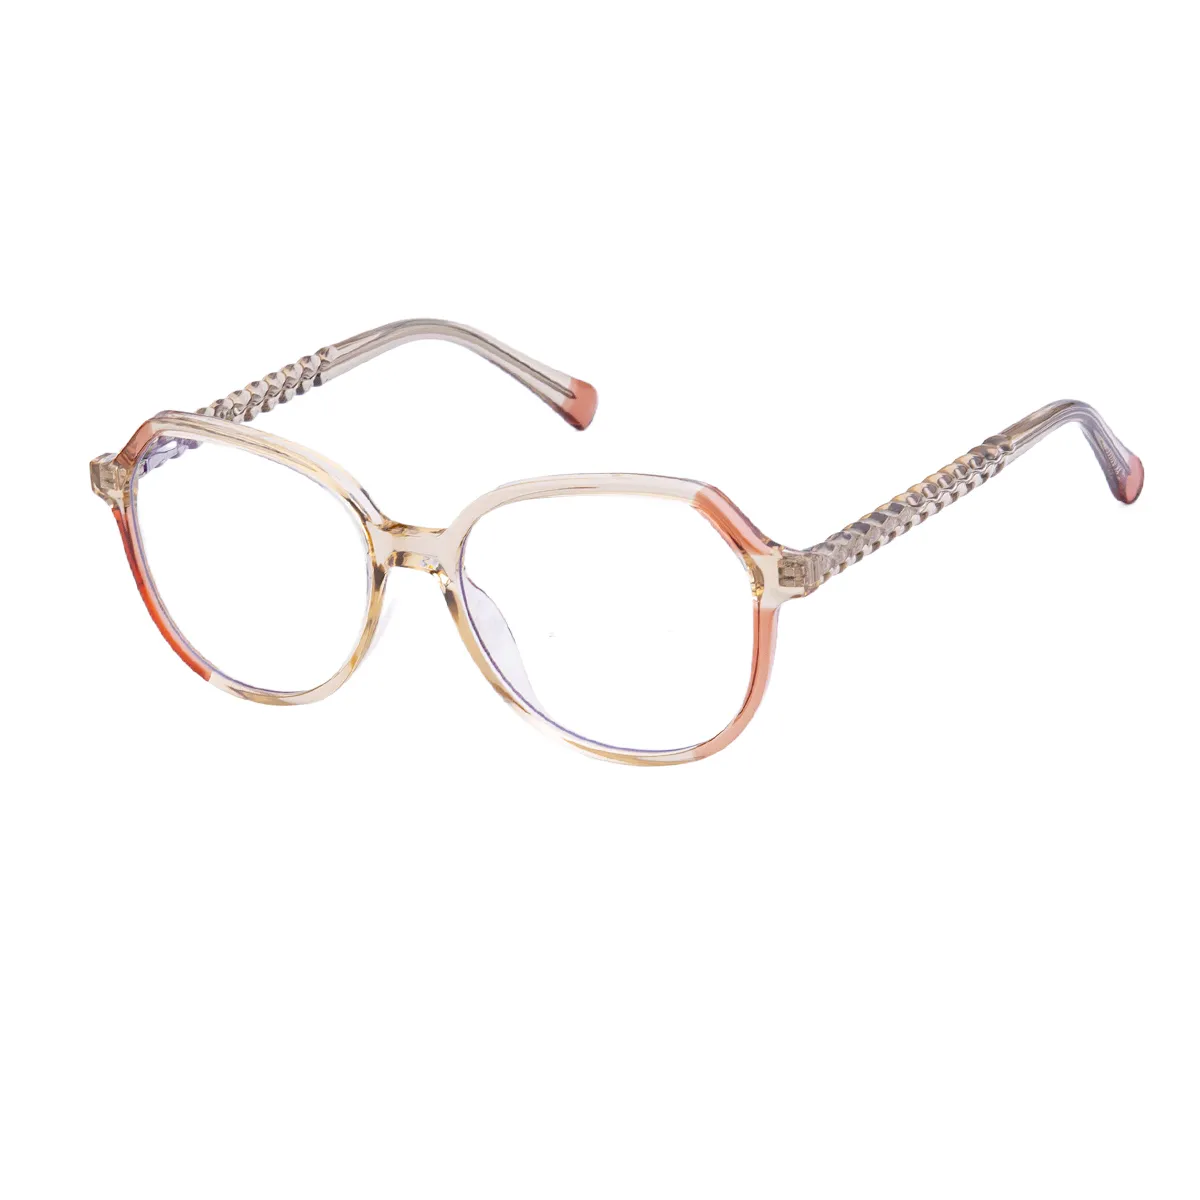 Calista - Geometric Cream Glasses for Women